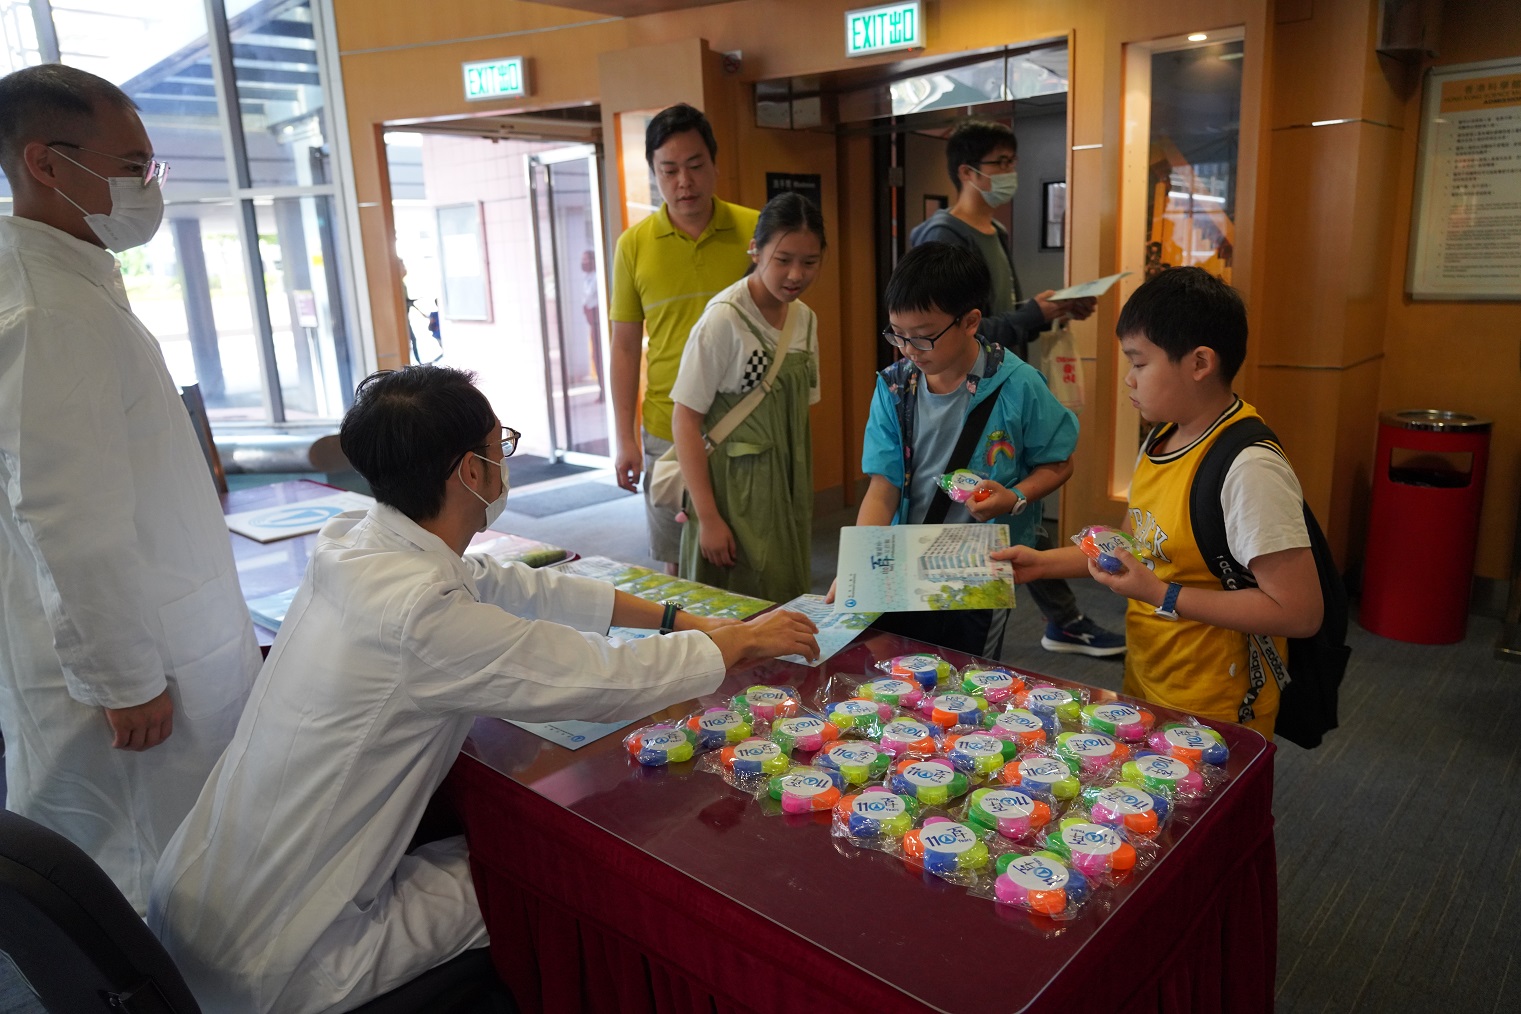 Participants received event souvenirs at the reception area.